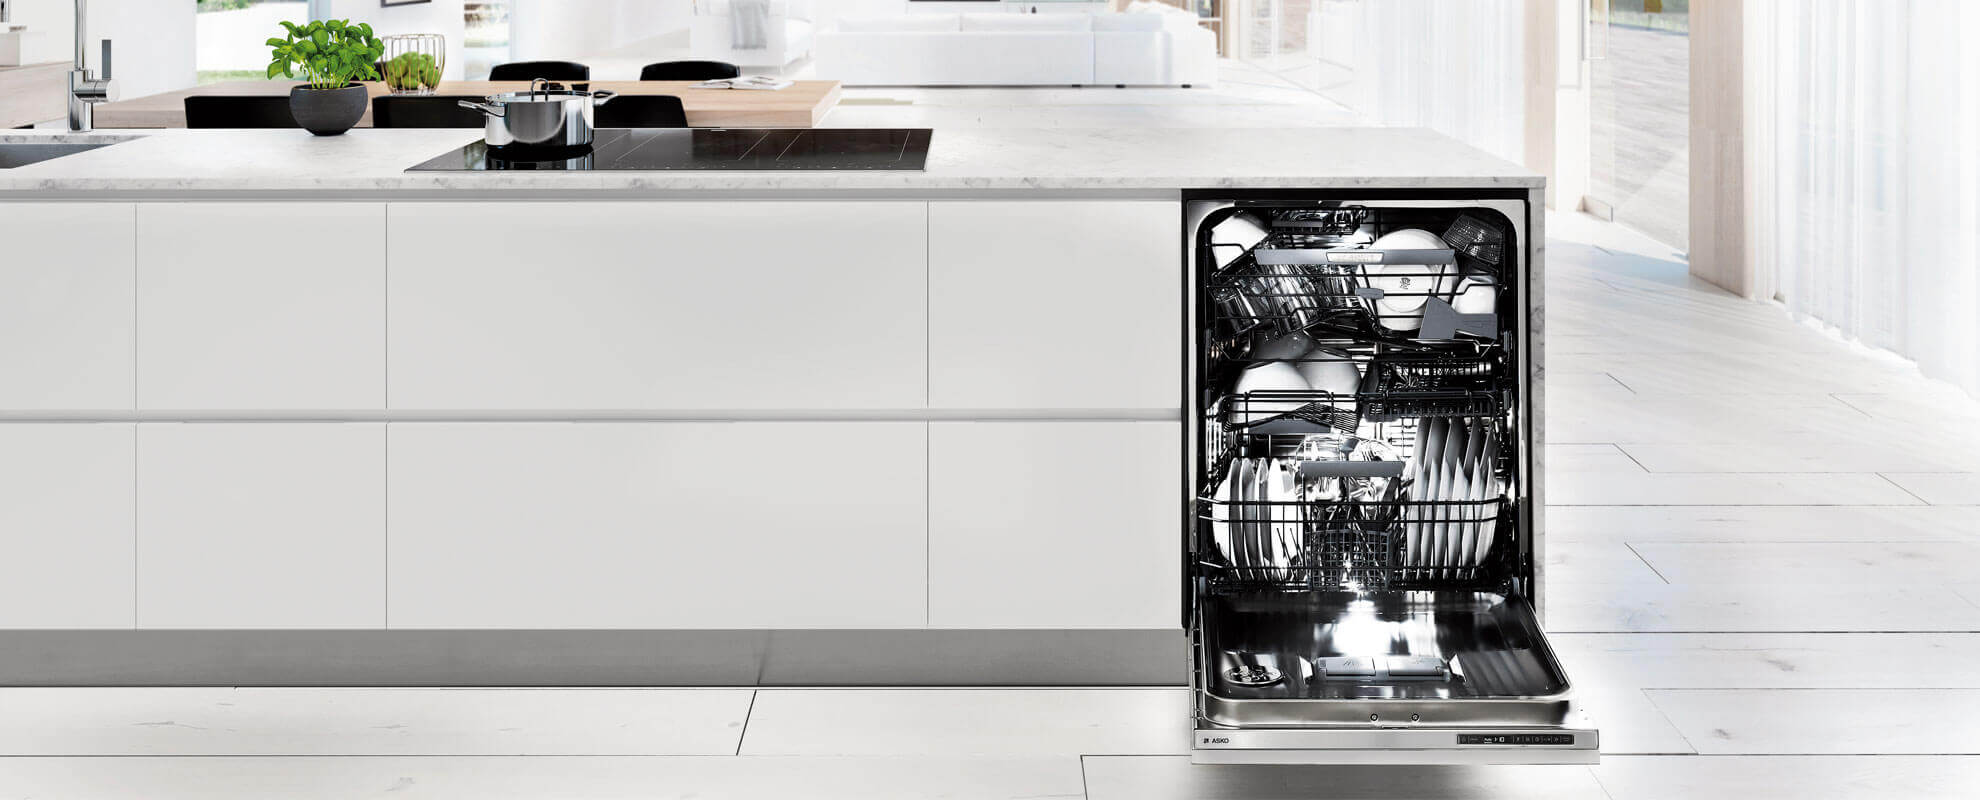 dishwasher front panel cabinet